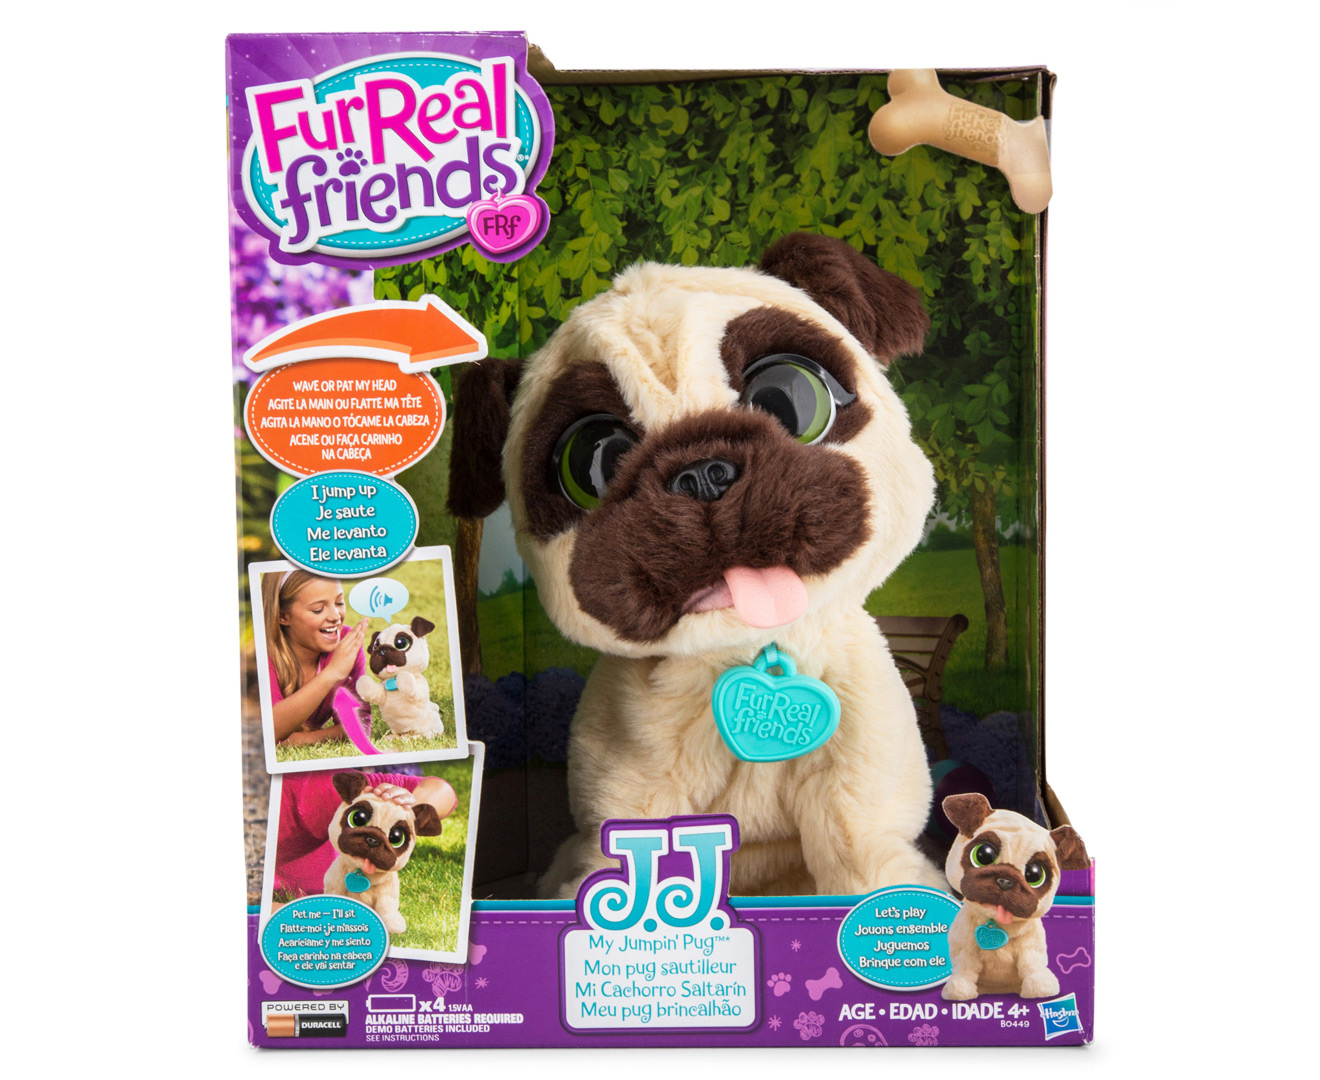 FurReal Friends J.J. My Jumpin Pug Dog - Instructions and Demo